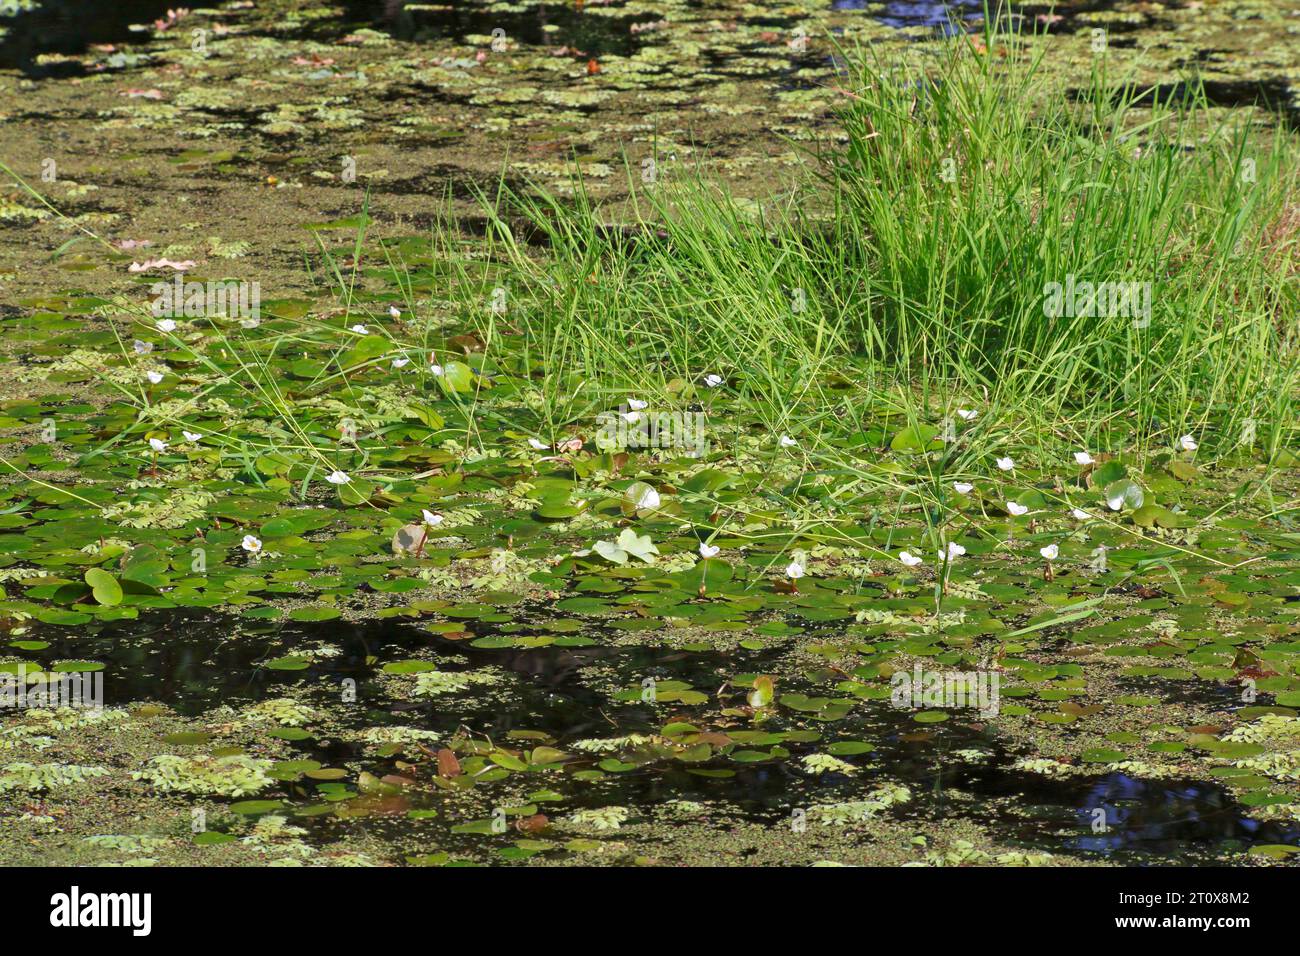 Common frogbit (Hydrocharis morsus-ranae), in flower on a still water body, Naturpark Flusslandschaft Peenetal, Mecklenburg-Western Pomerania, Germany Stock Photo